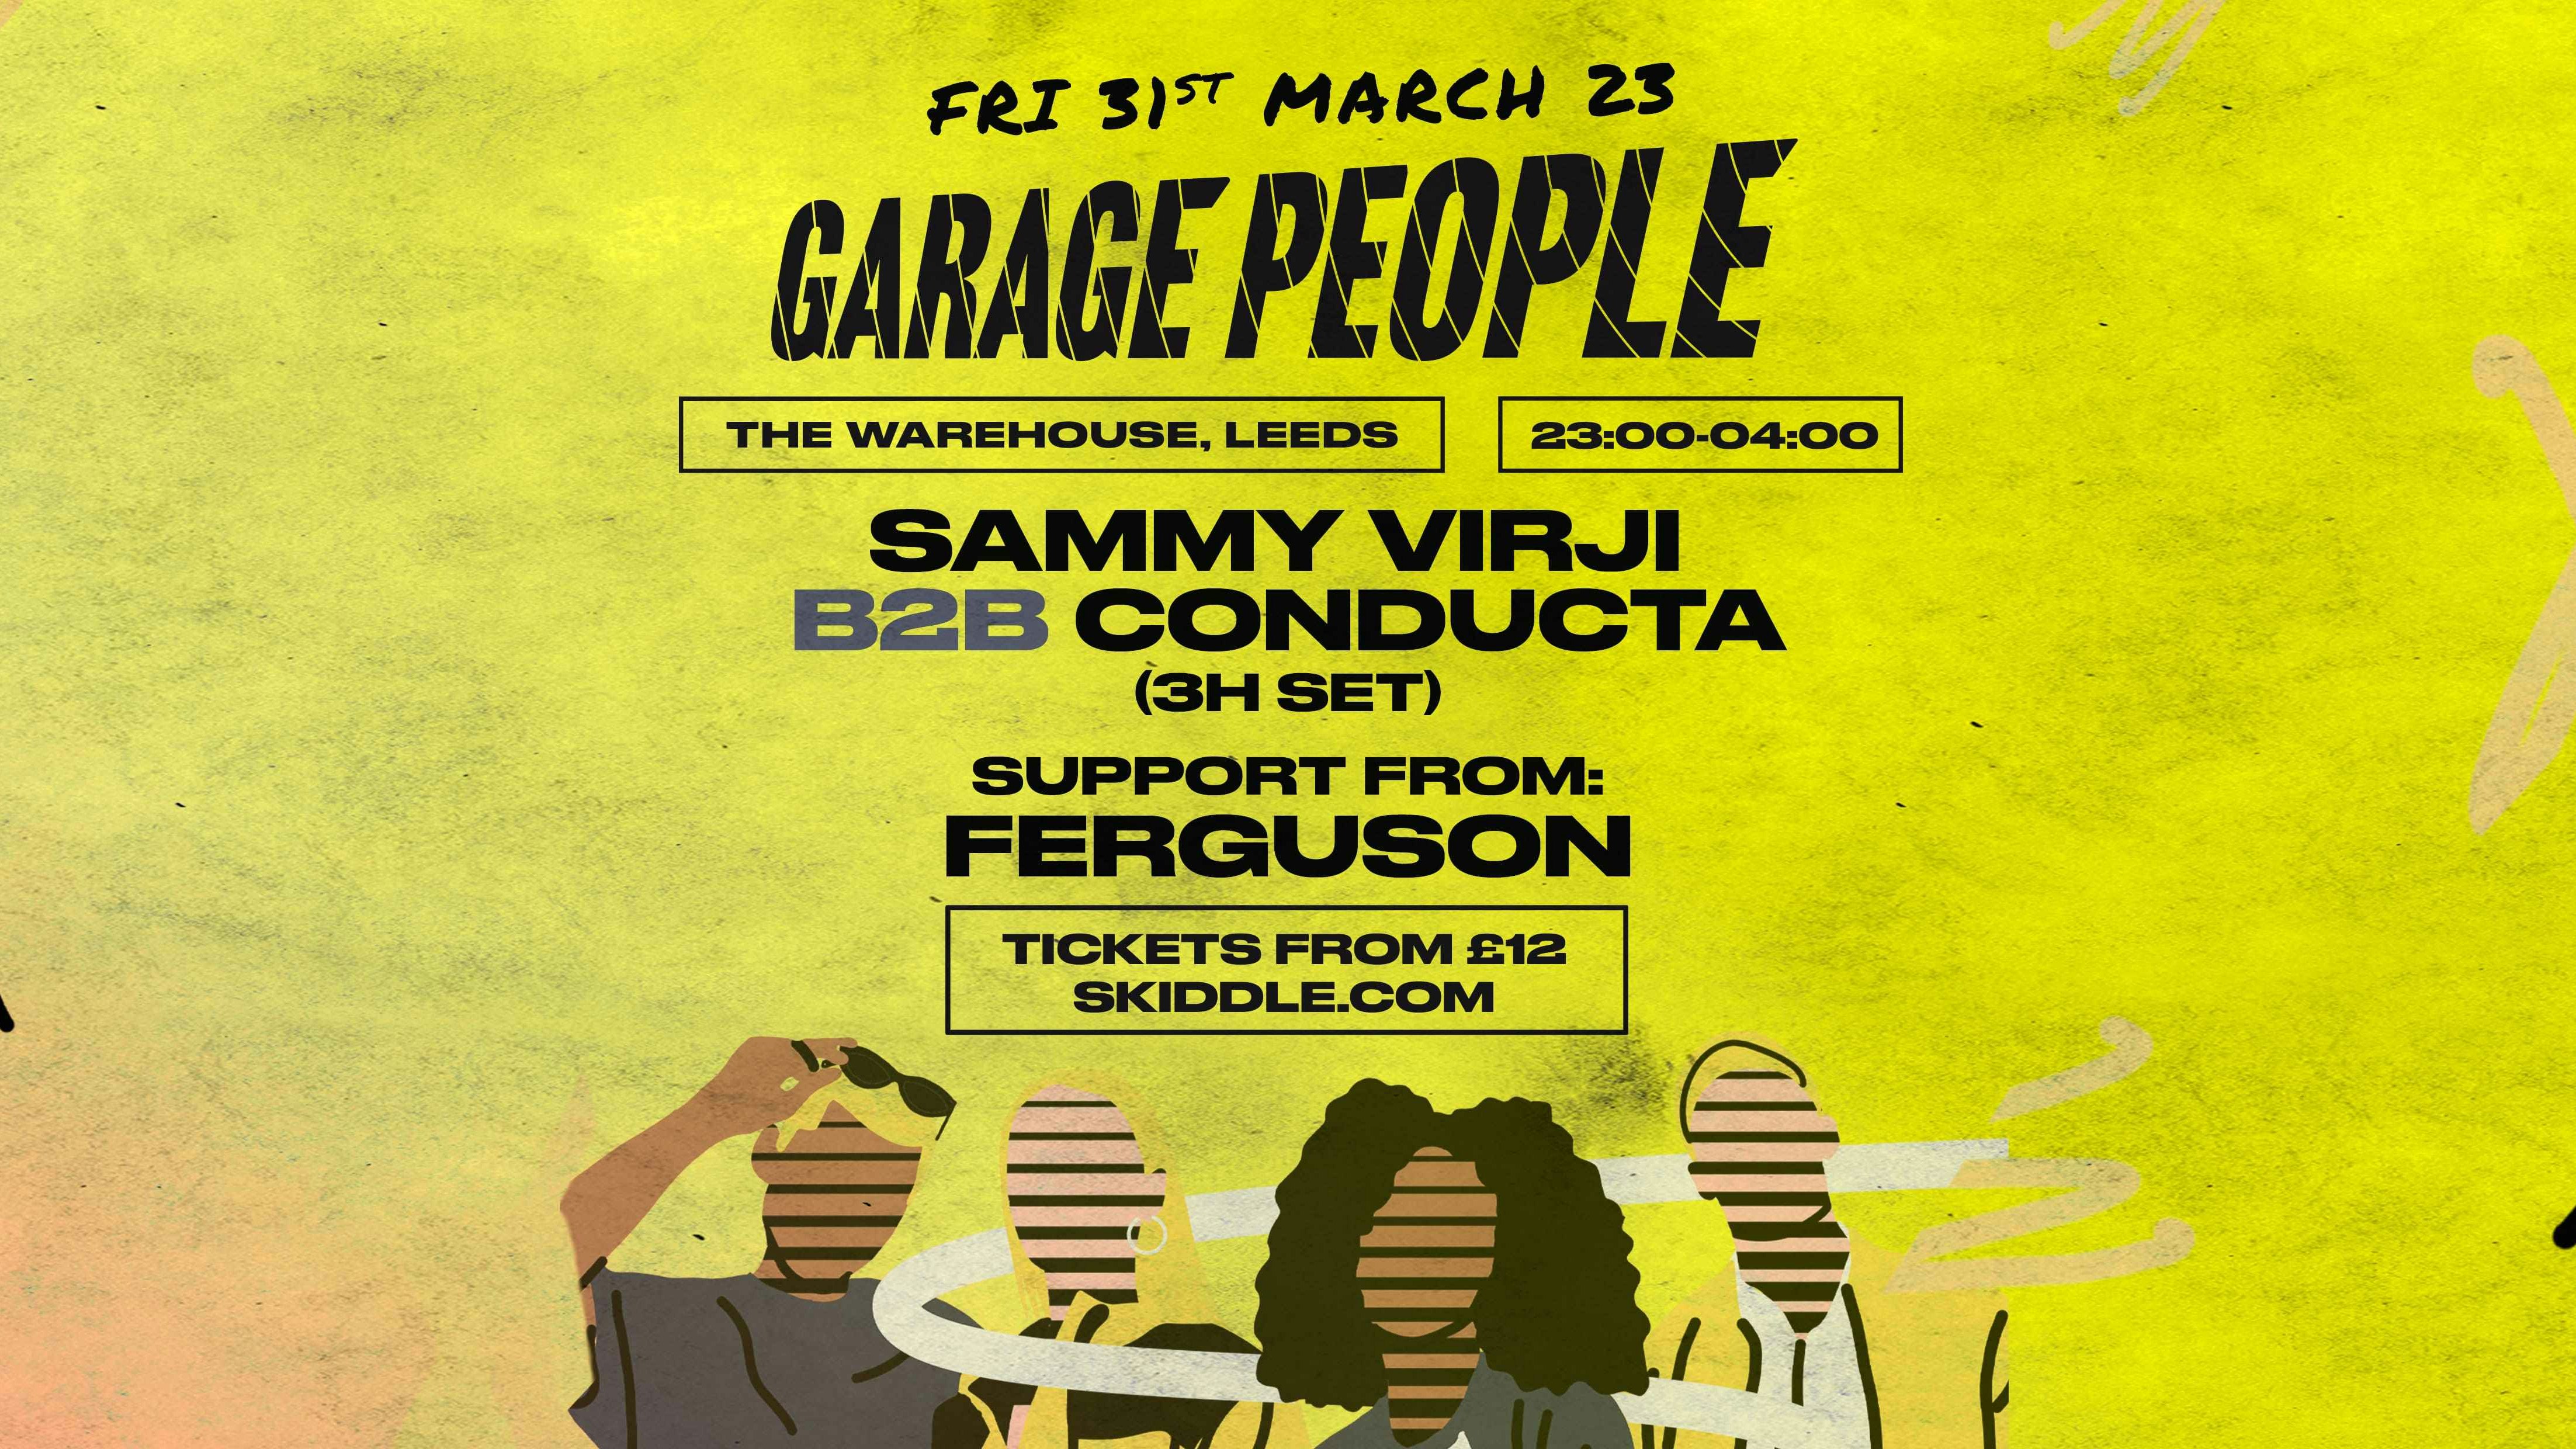 Garage People: Sammy Virji B2B Conducta